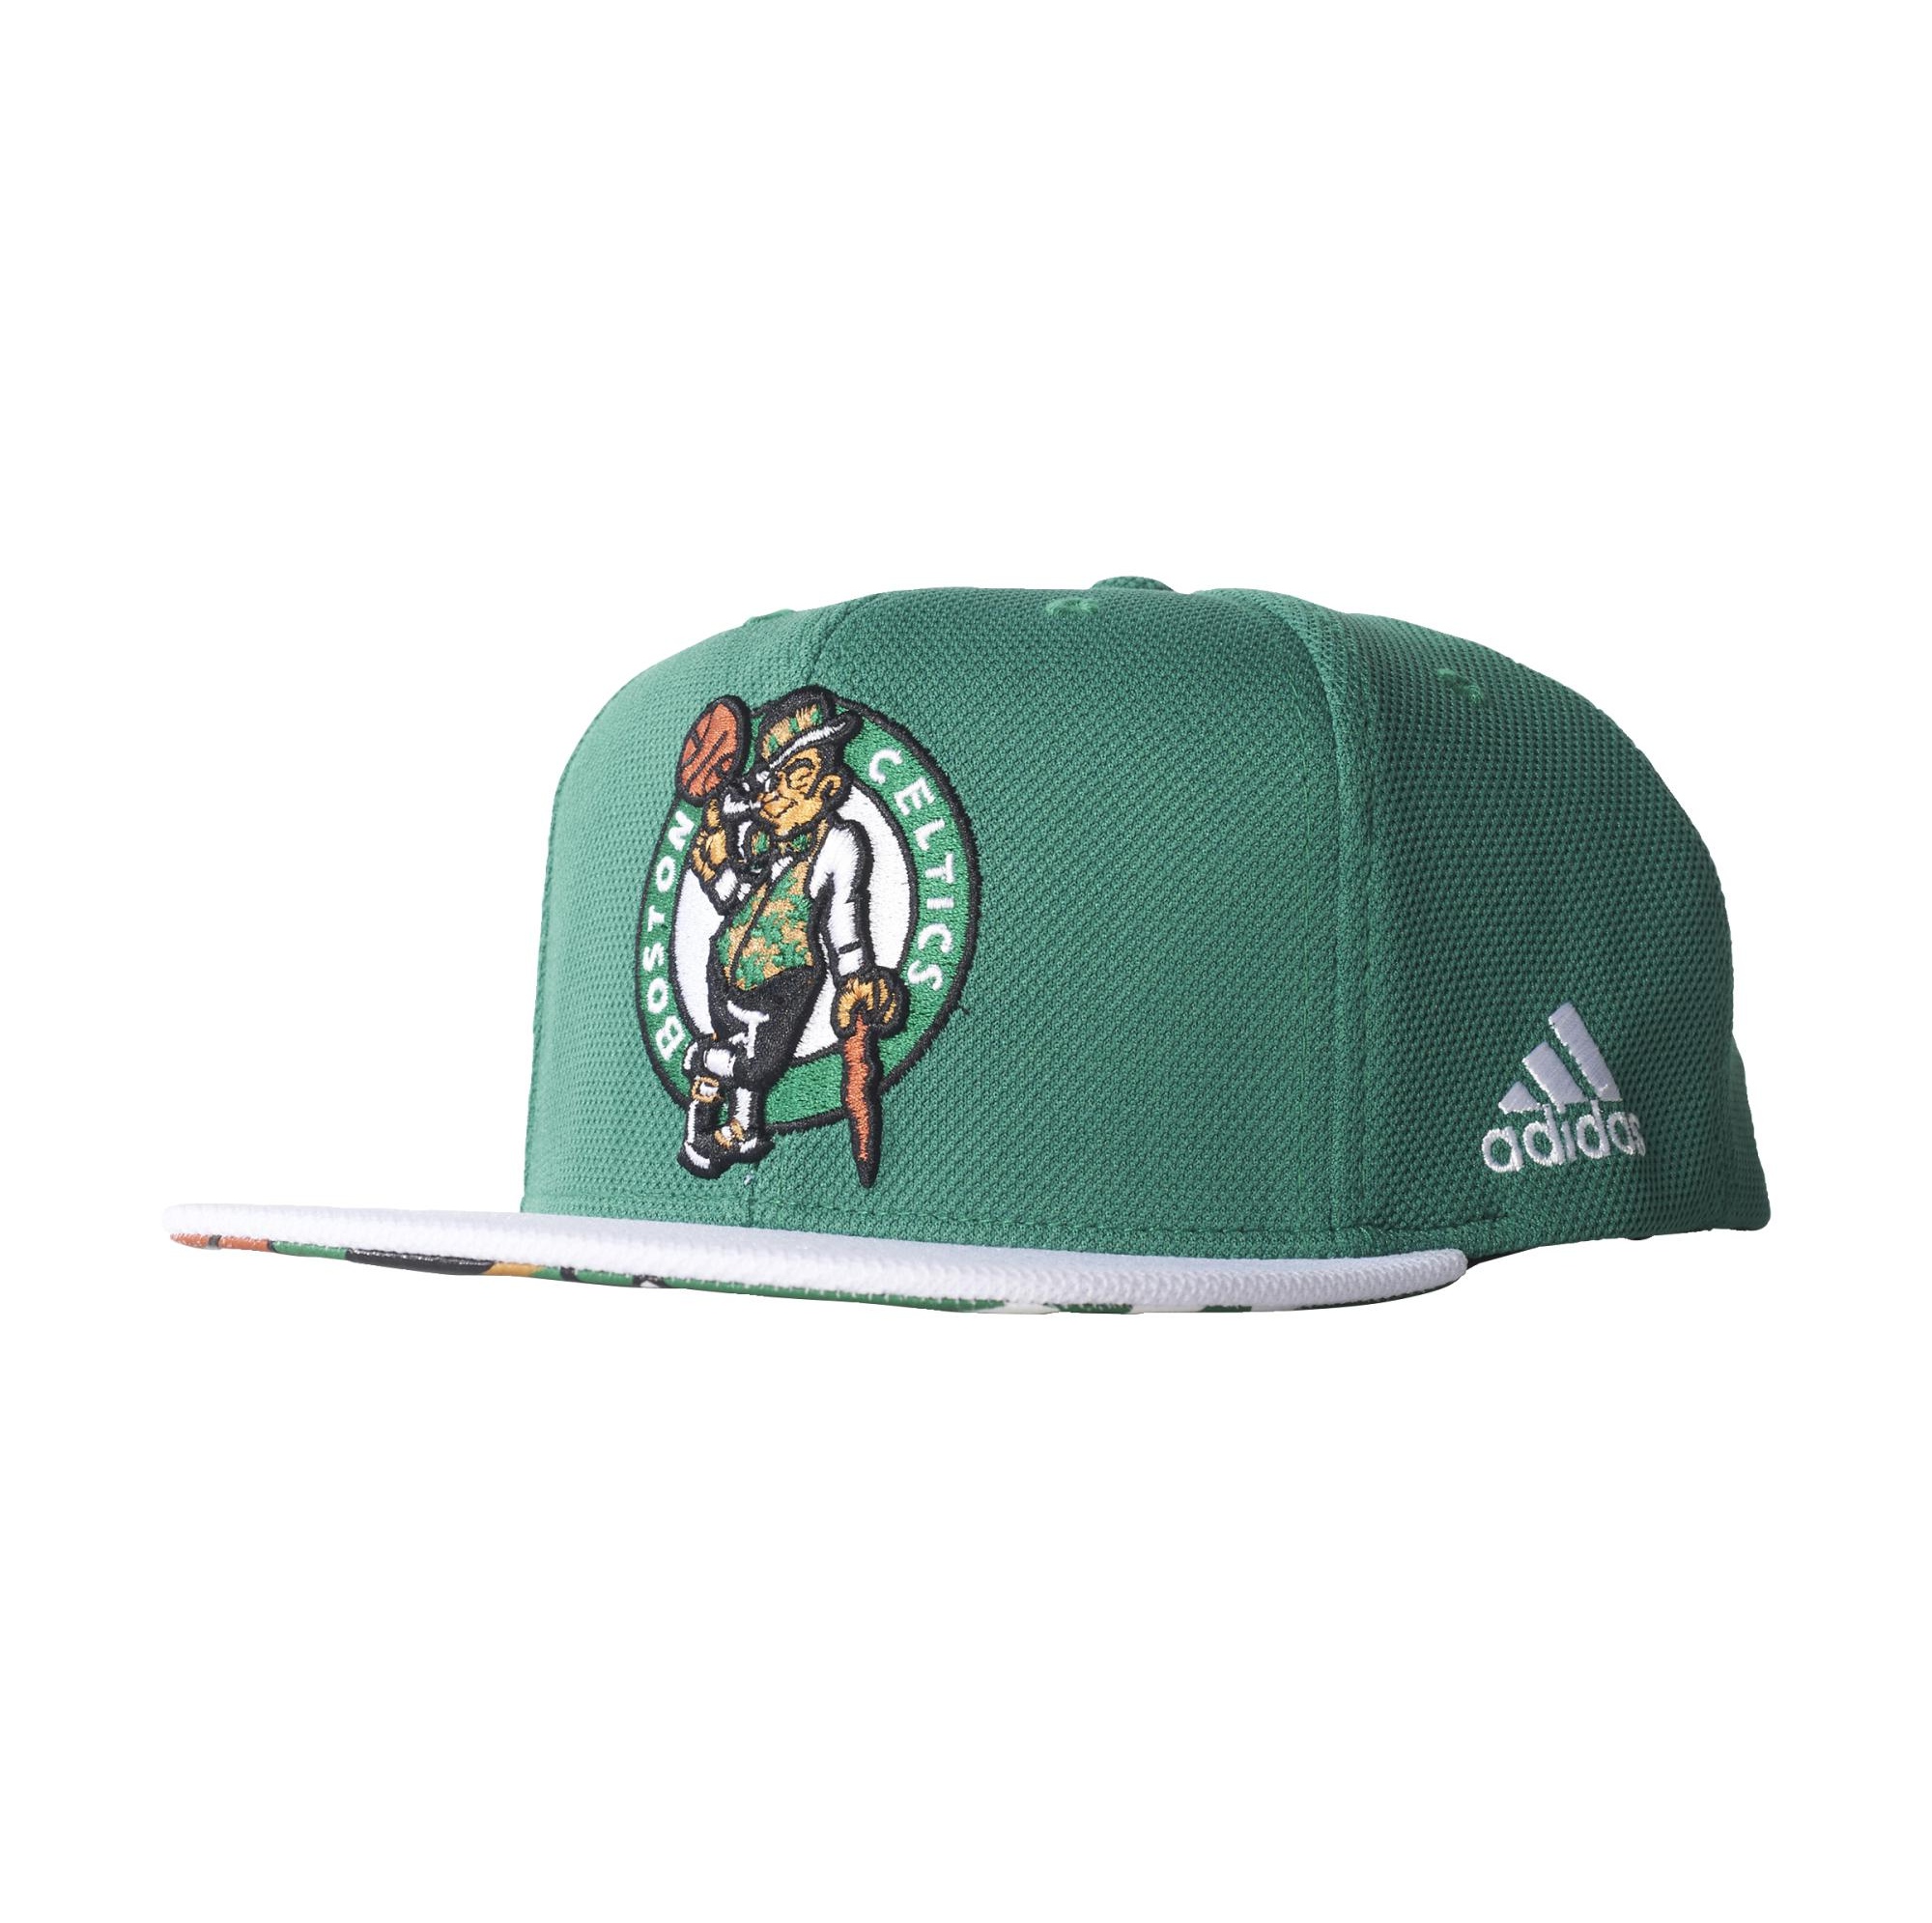 A veces embarazada comienzo Adidas NBA Gorra Flat Cap Celtics (verde/blanco/negro)